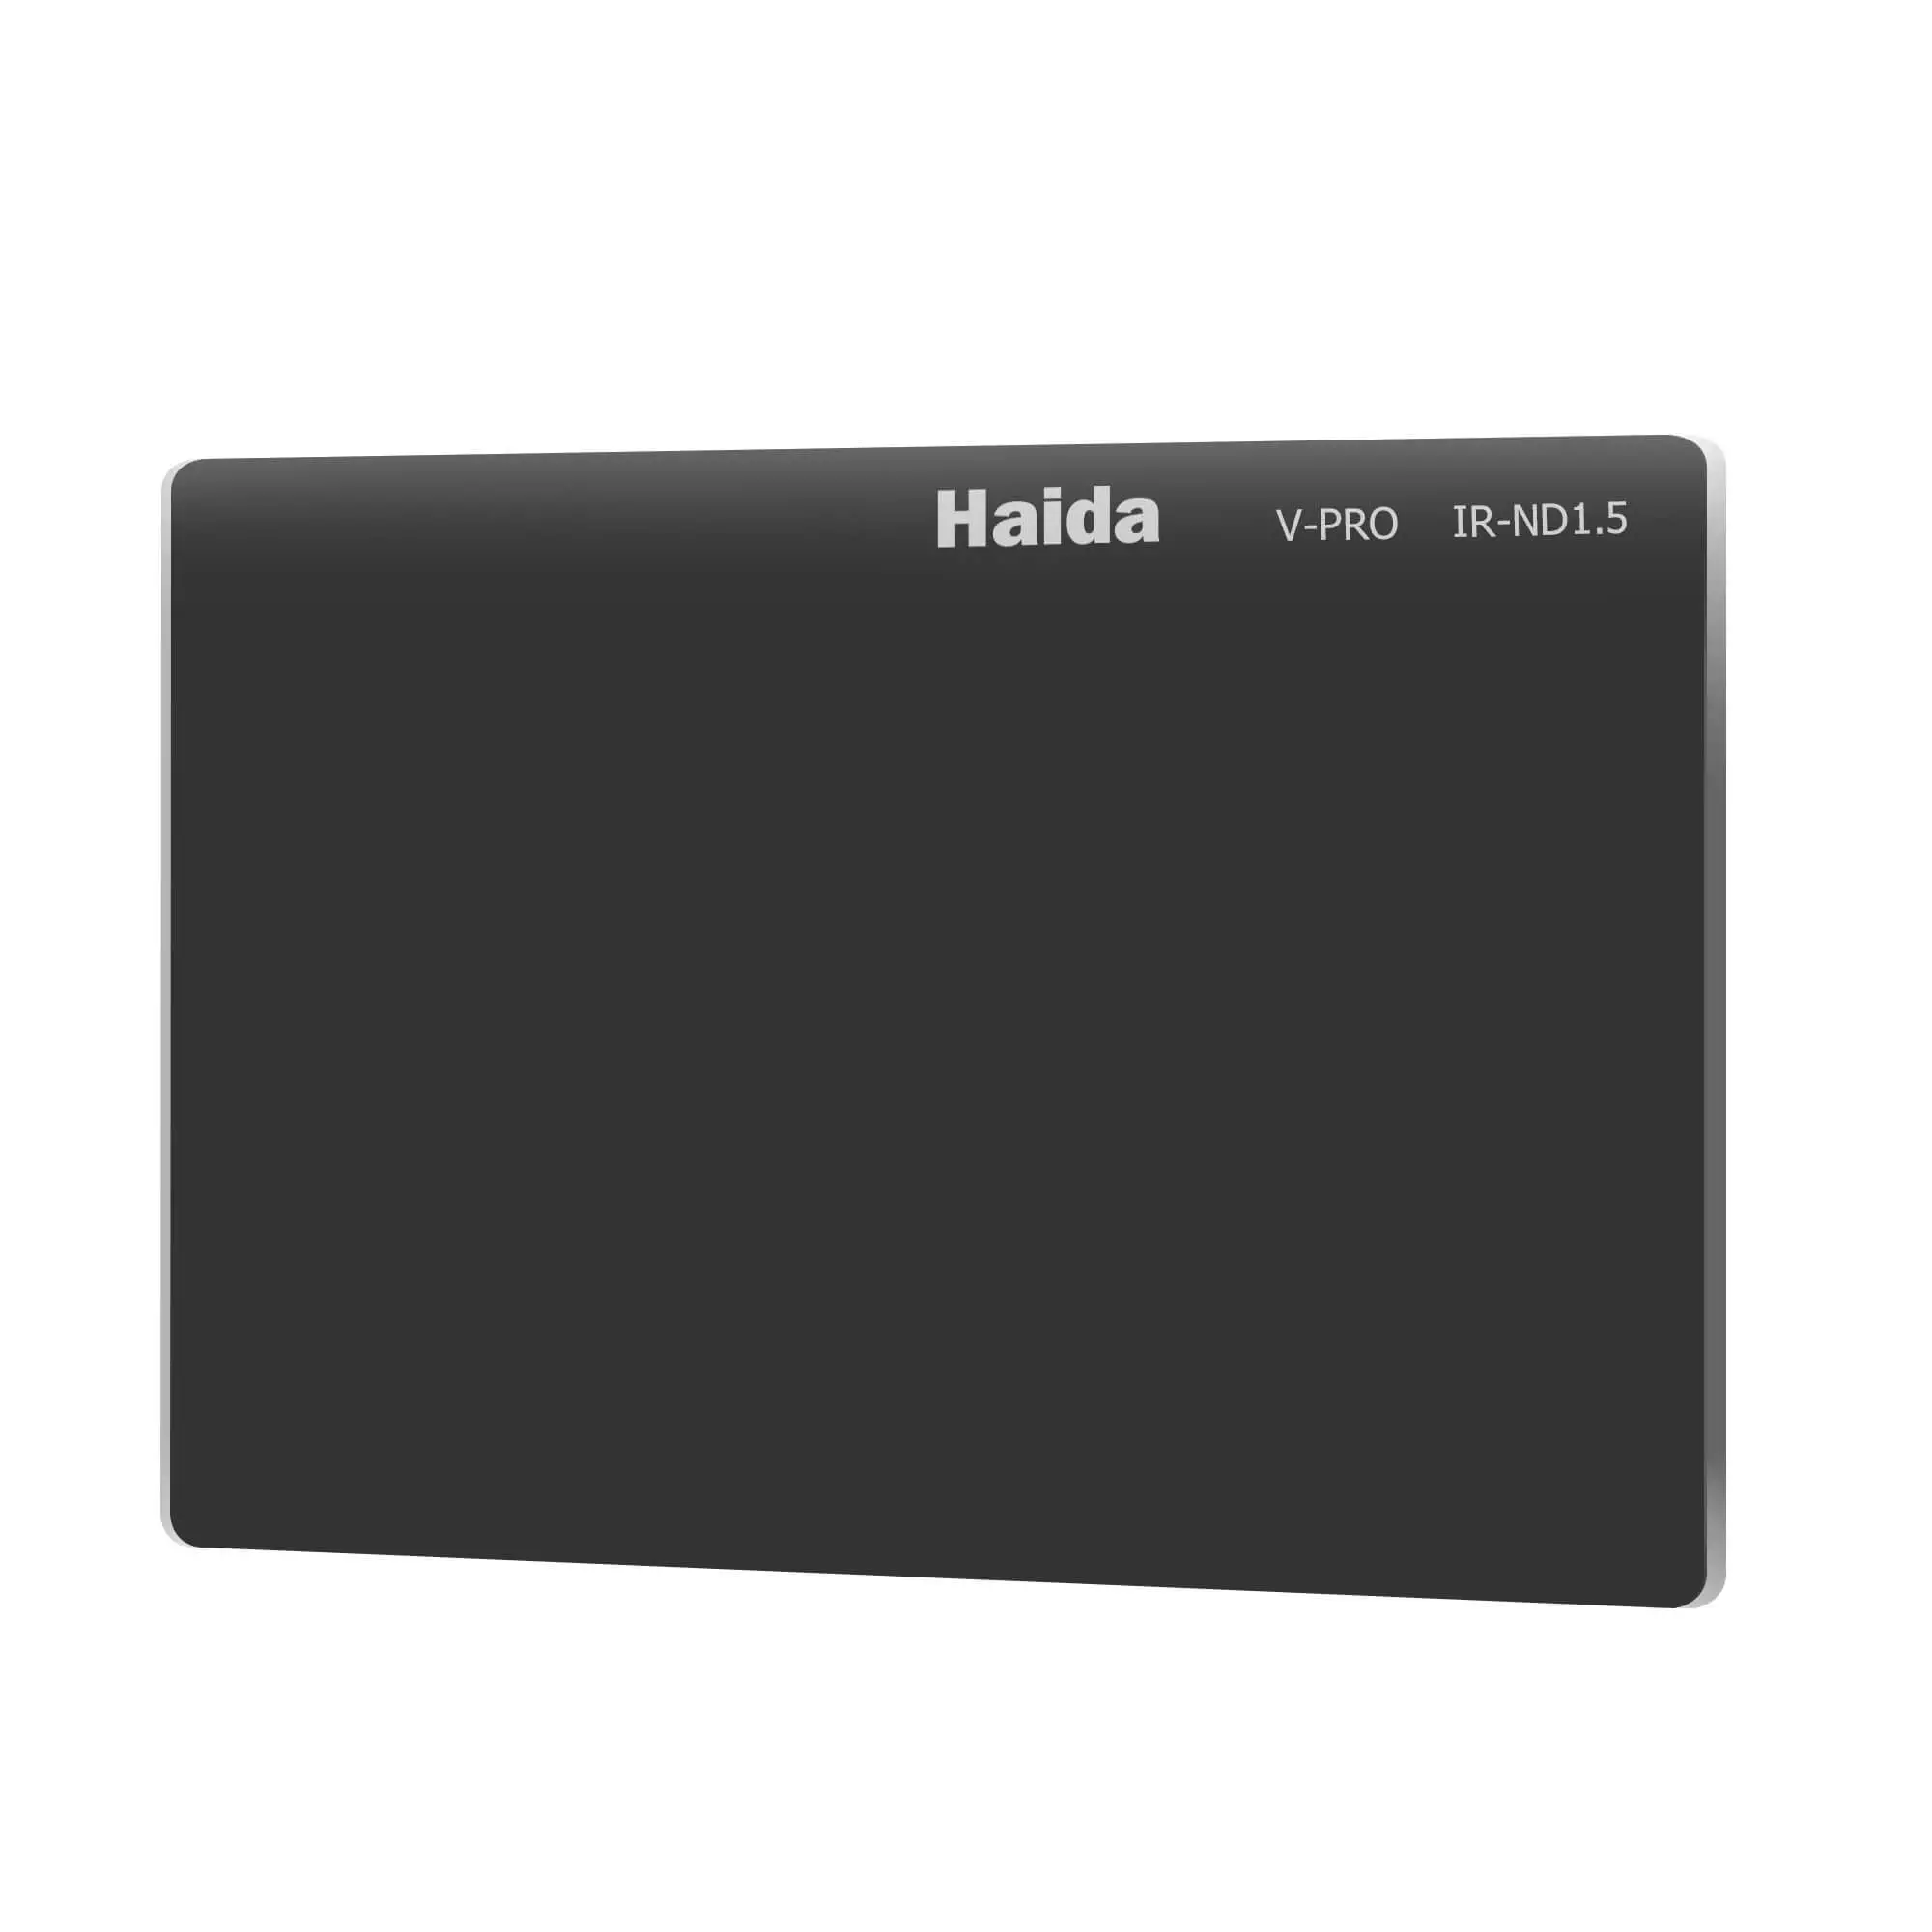 Haida V-PRO Series MC IR-ND Filters